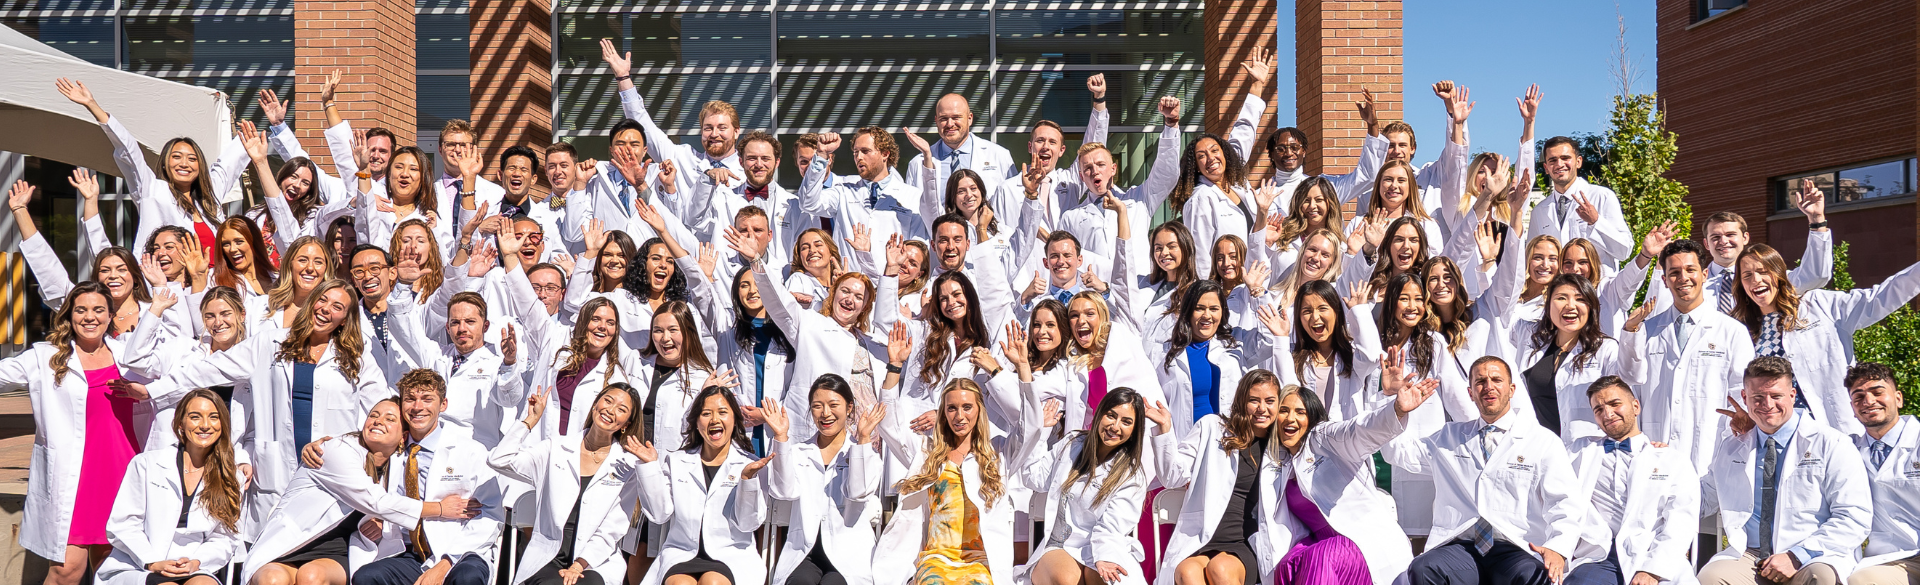 dental students celebrating at their white coat ceremony